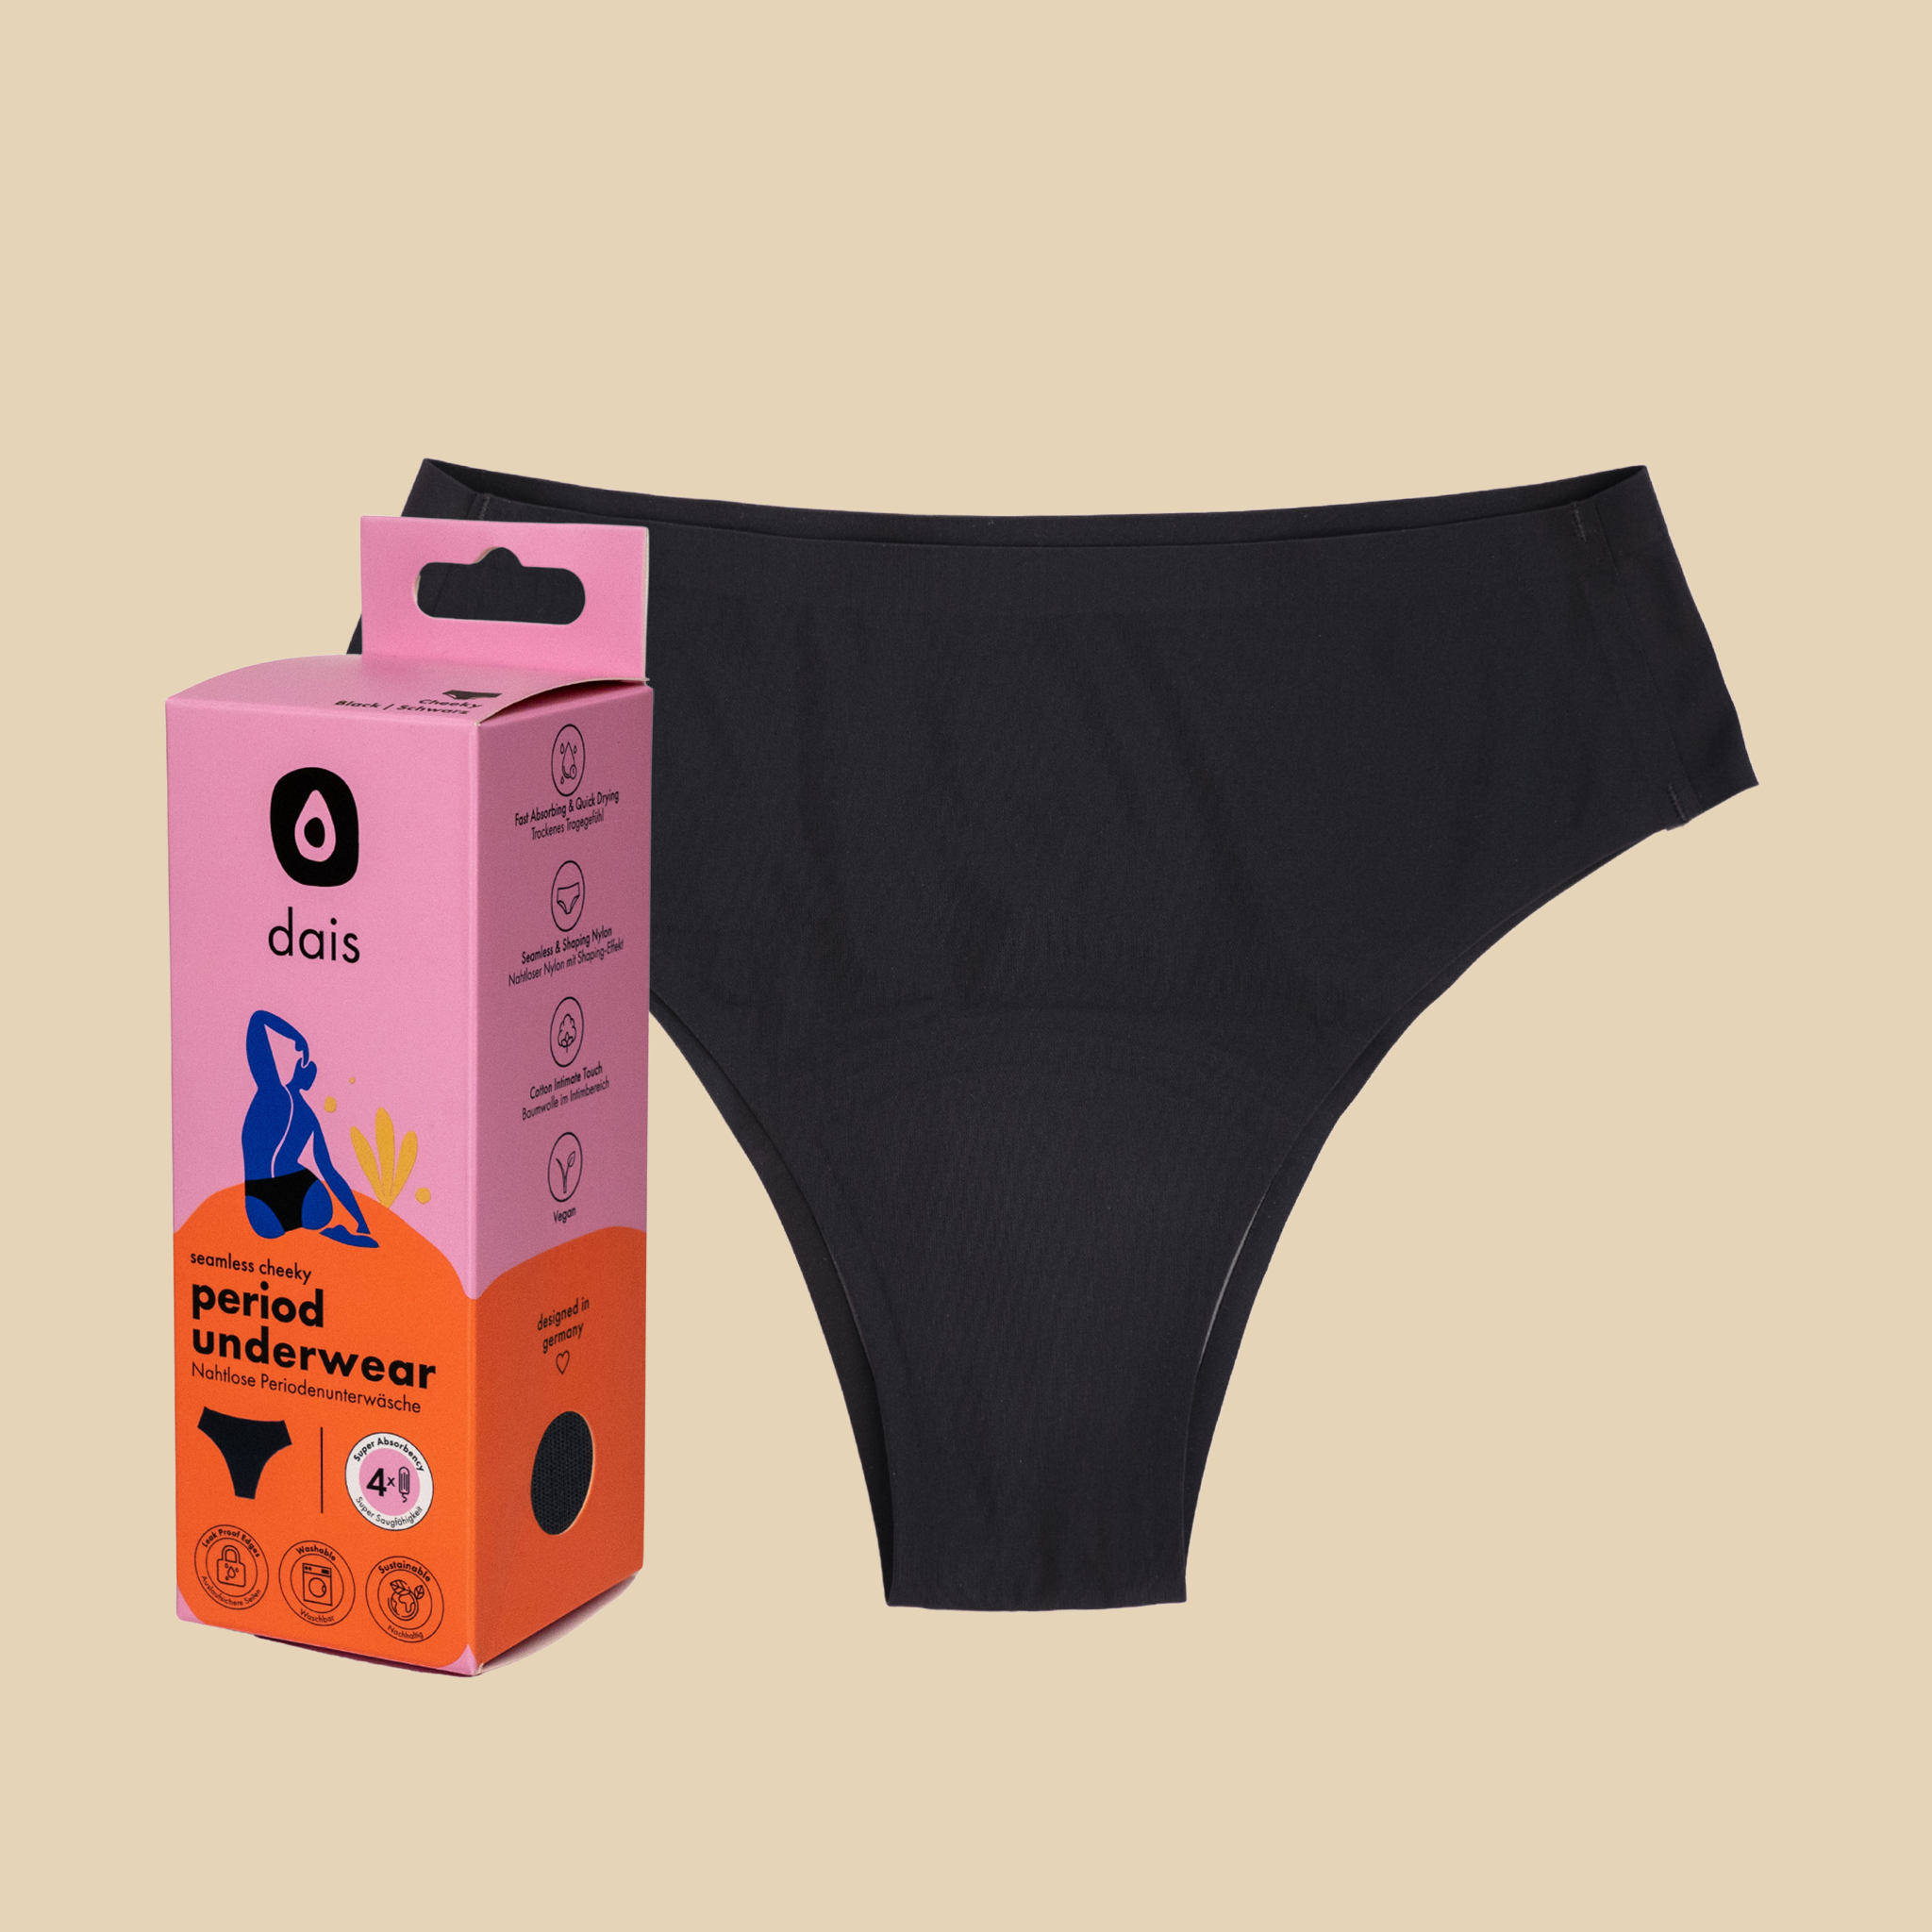 dais period underwear in cheeky cut in black with modern packaging